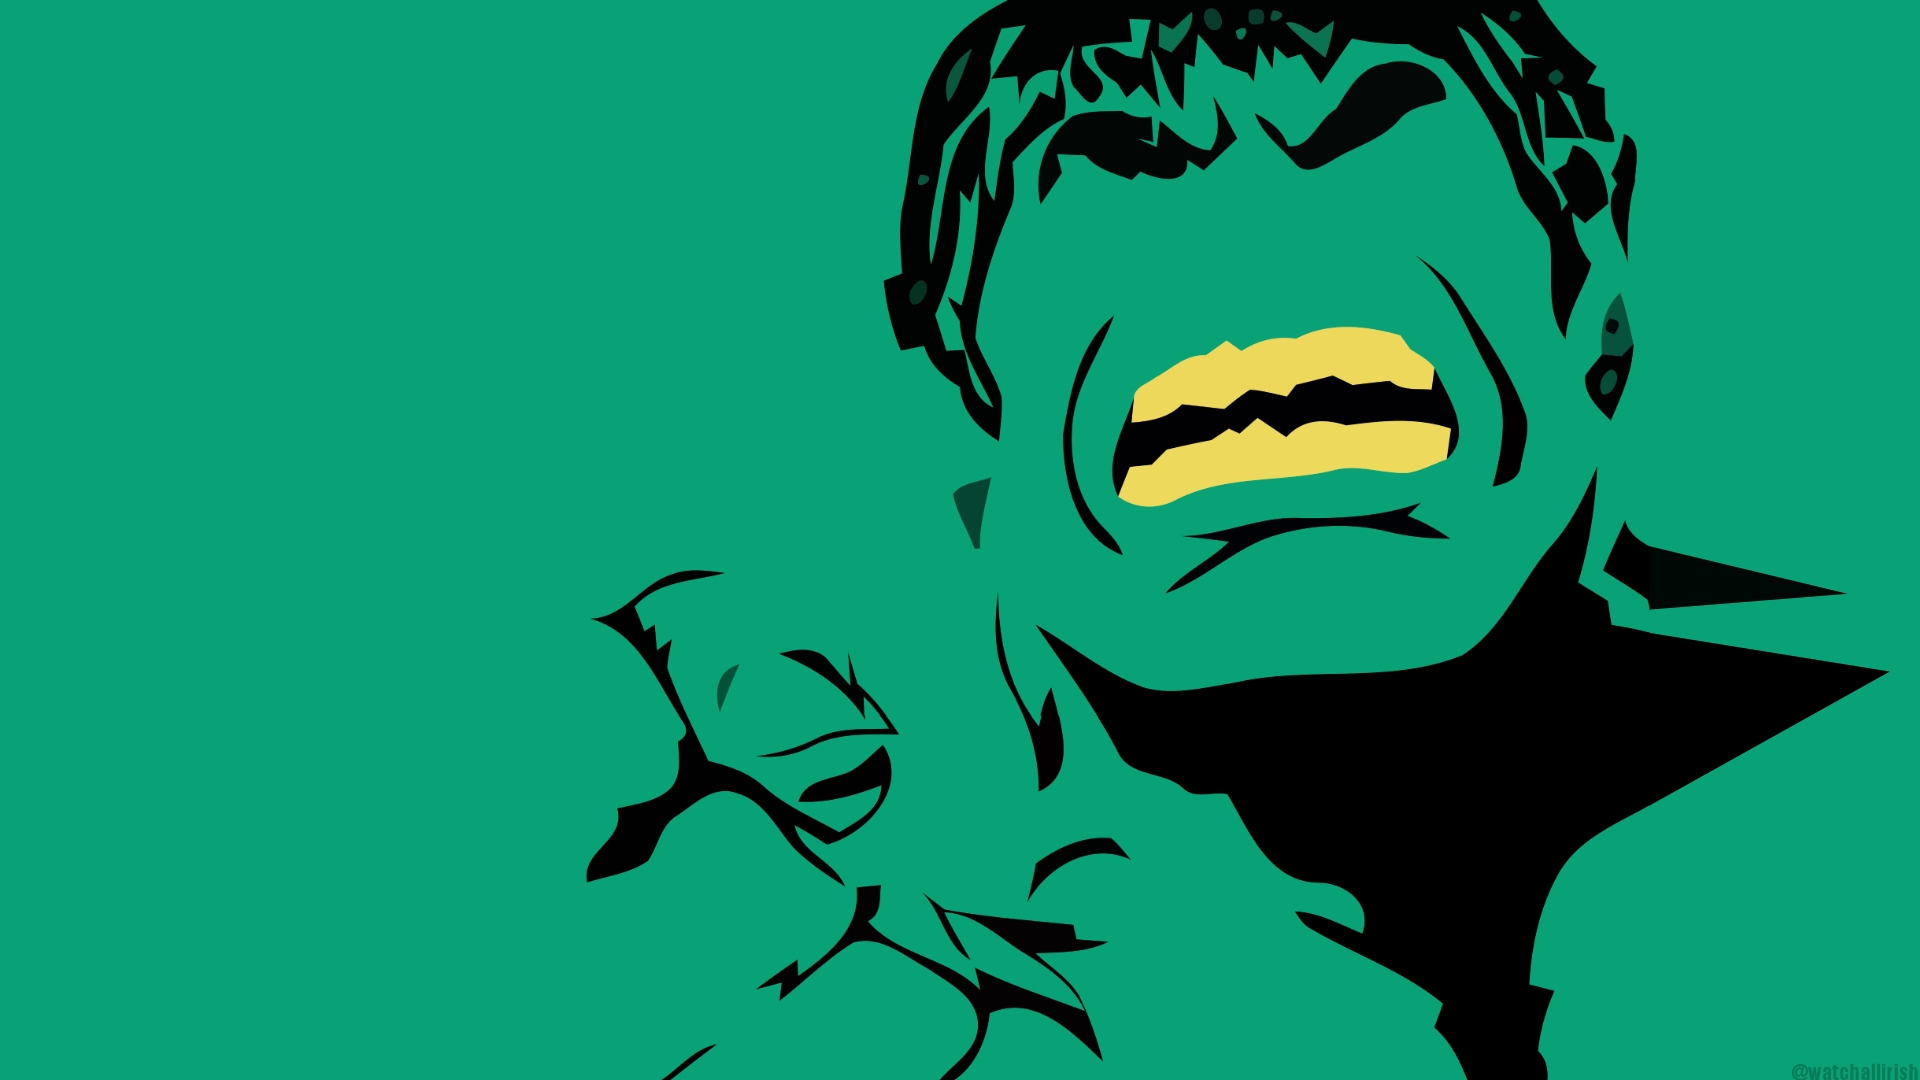 Free download hulk smash watchall wallpapers x for your desktop mobile tablet explore hulk cartoon wallpapers hulk wallpaper cartoon backgrounds hulk wallpapers